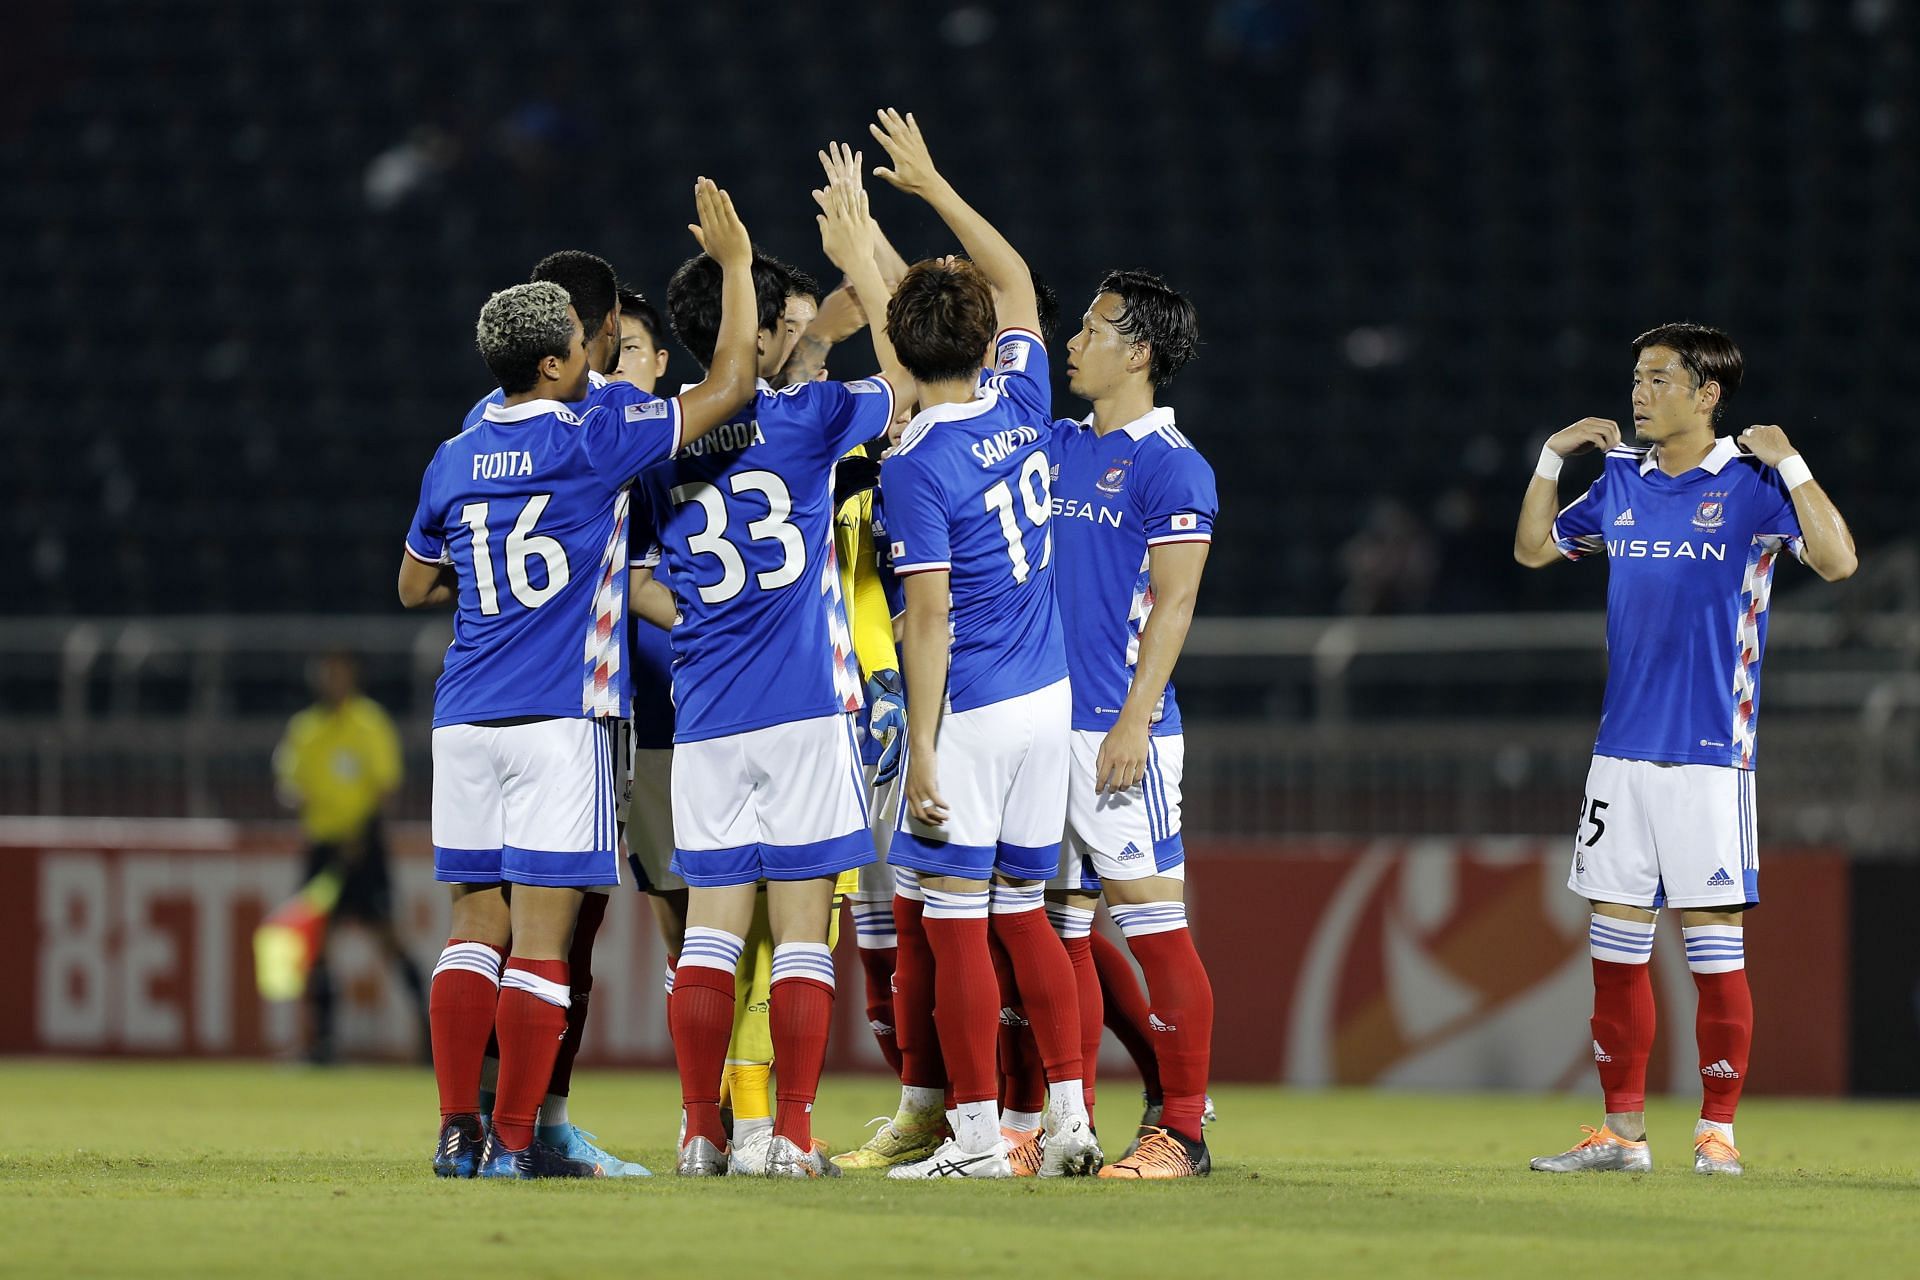 Yokohama F. Marinos need to overcome Sanfrecce Hiroshima in their J League Cup fixture on Wednesday